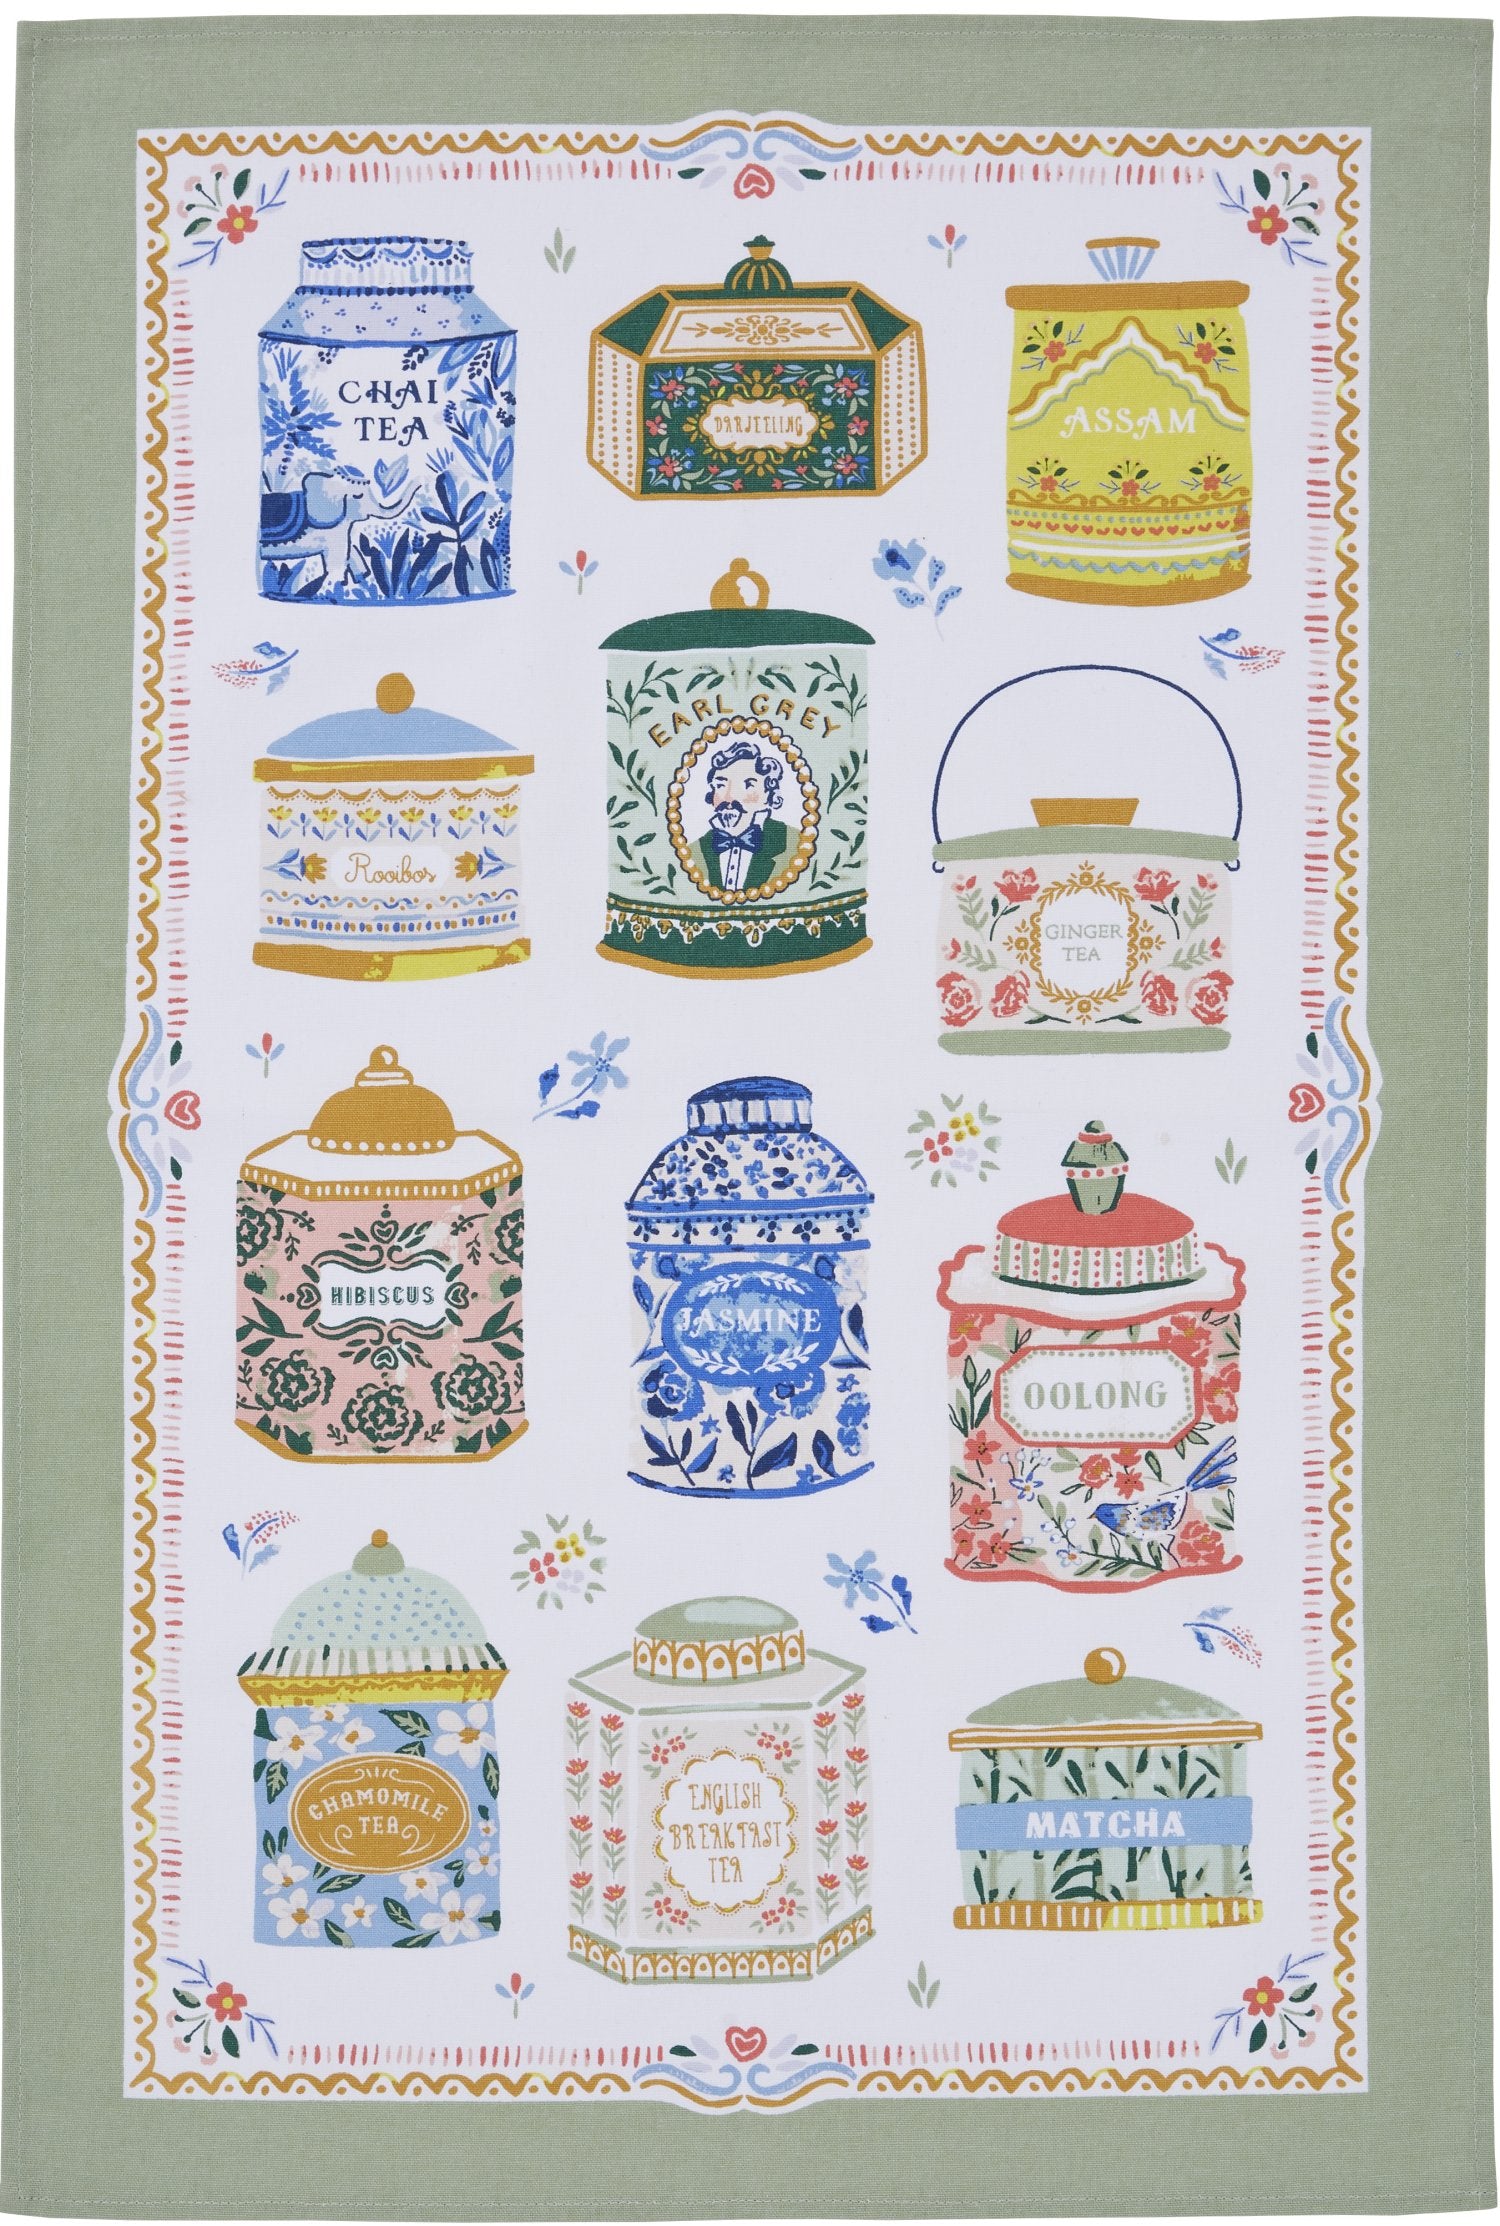 Ulster Weavers, "Tea Tins", Printed cotton tea towel.